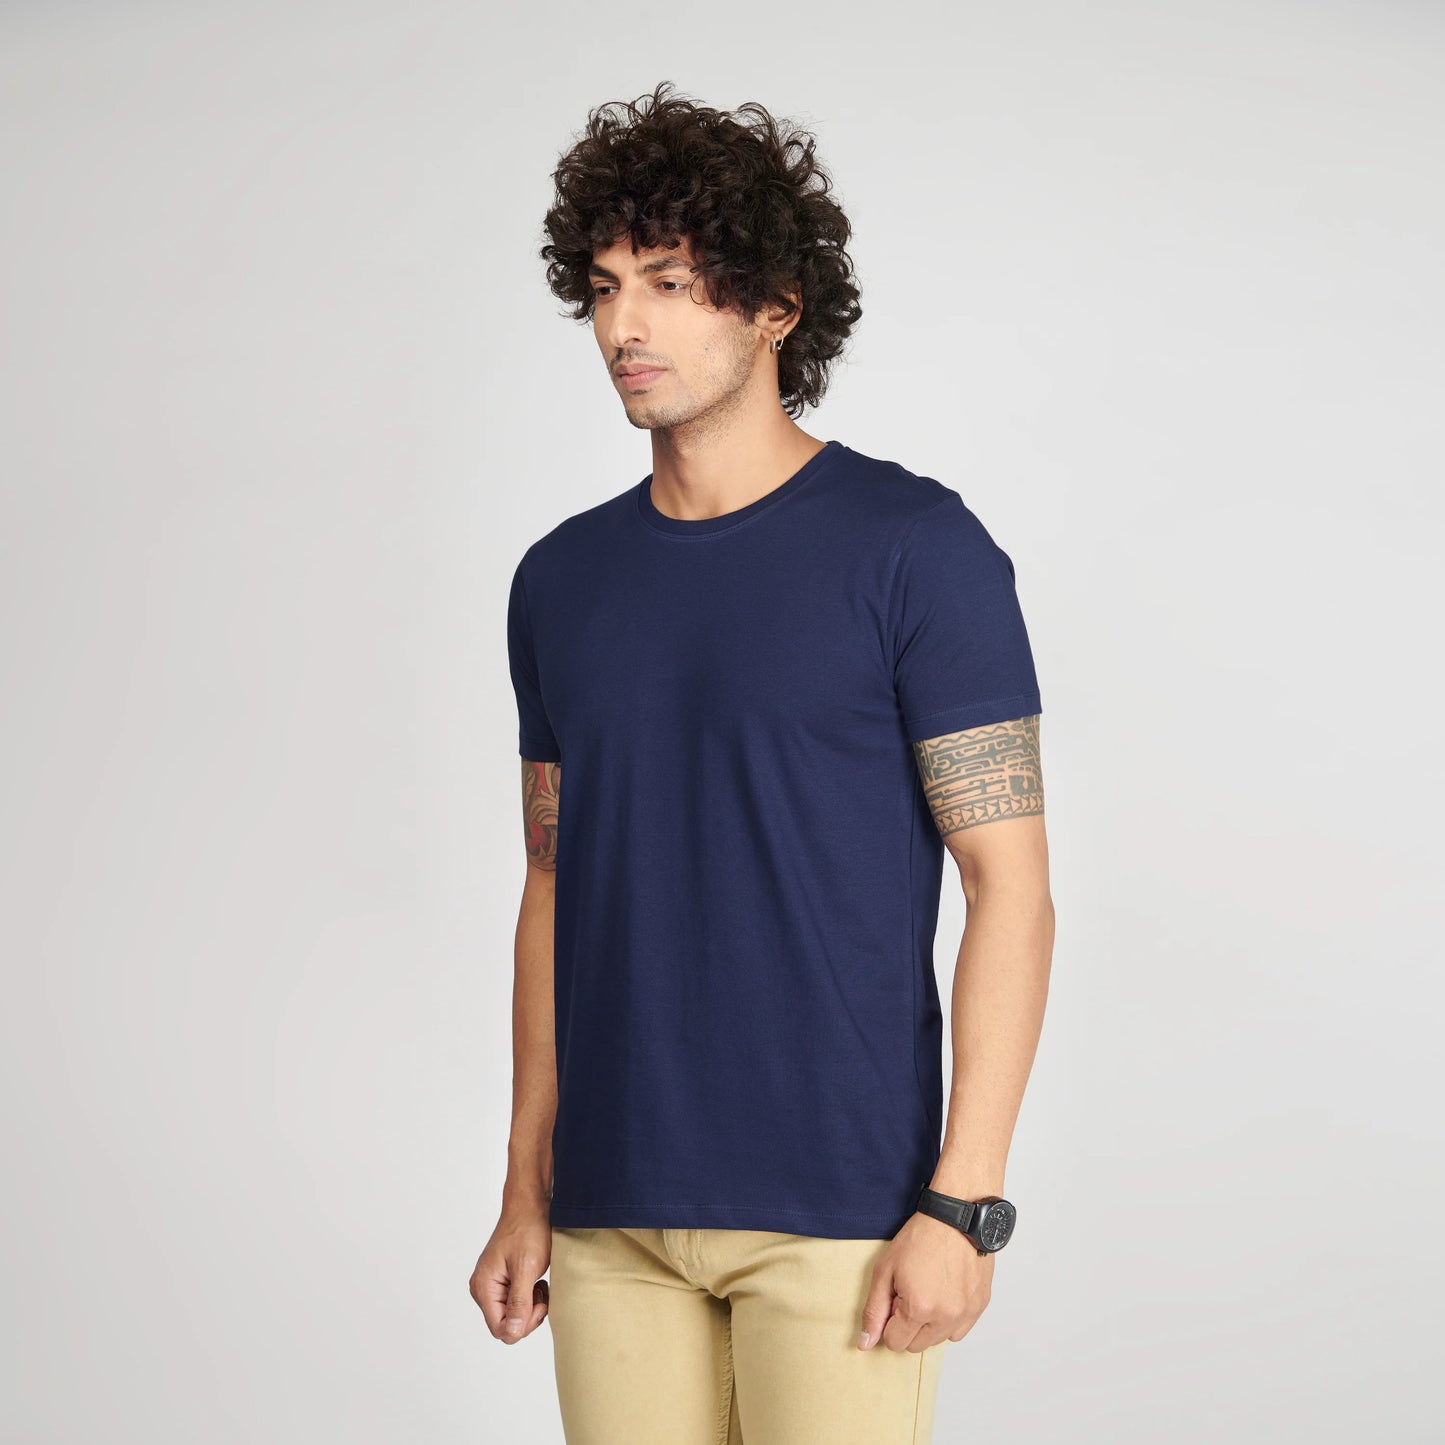 Basic Navy Blue Half Sleeves T-Shirt